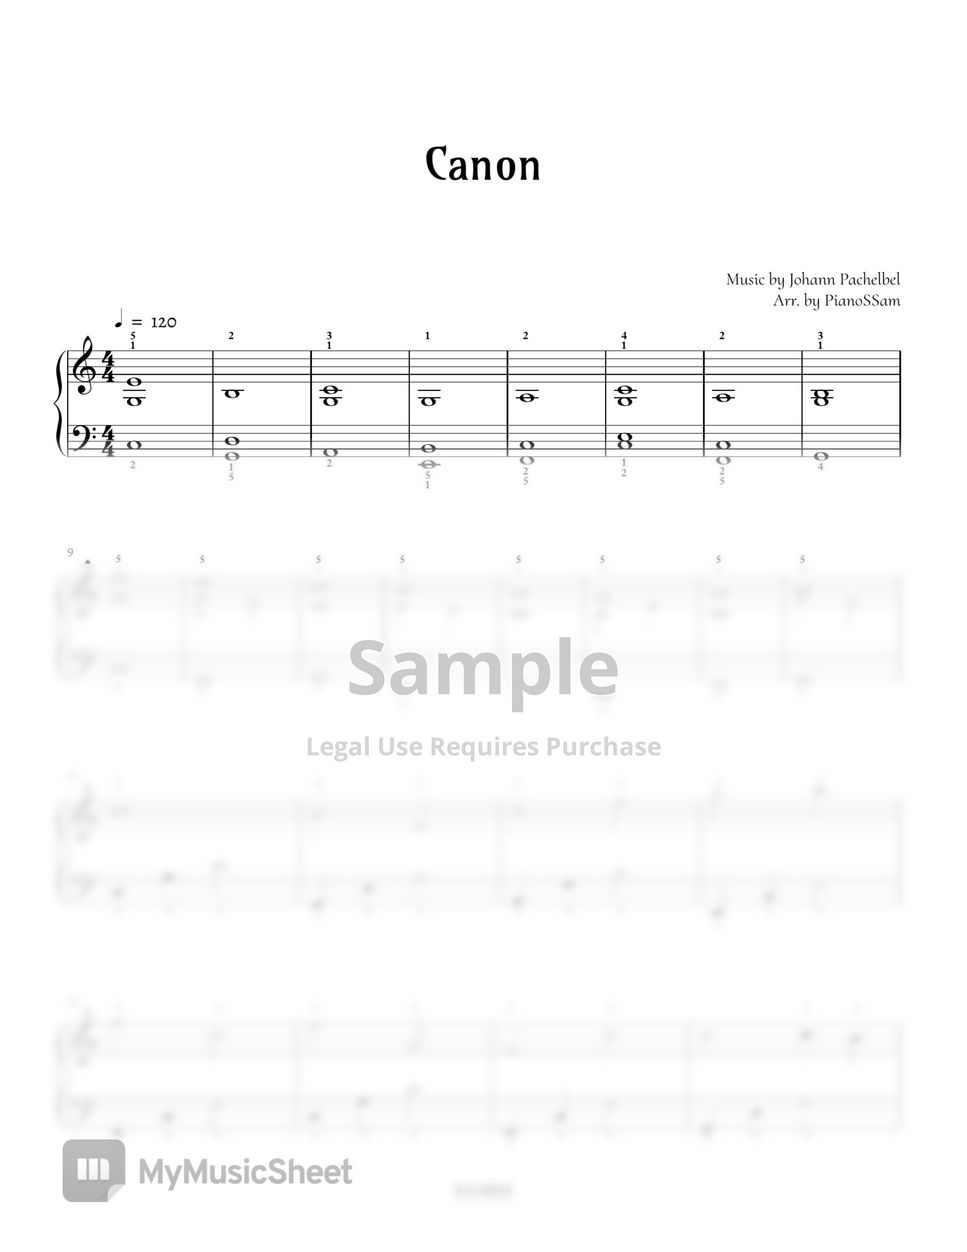 Johann pachelbel - [Easy] Canon(파헬벨의 캐논) | Piano Arrangement in C major + MIDI file (Classic) by PianoSSam